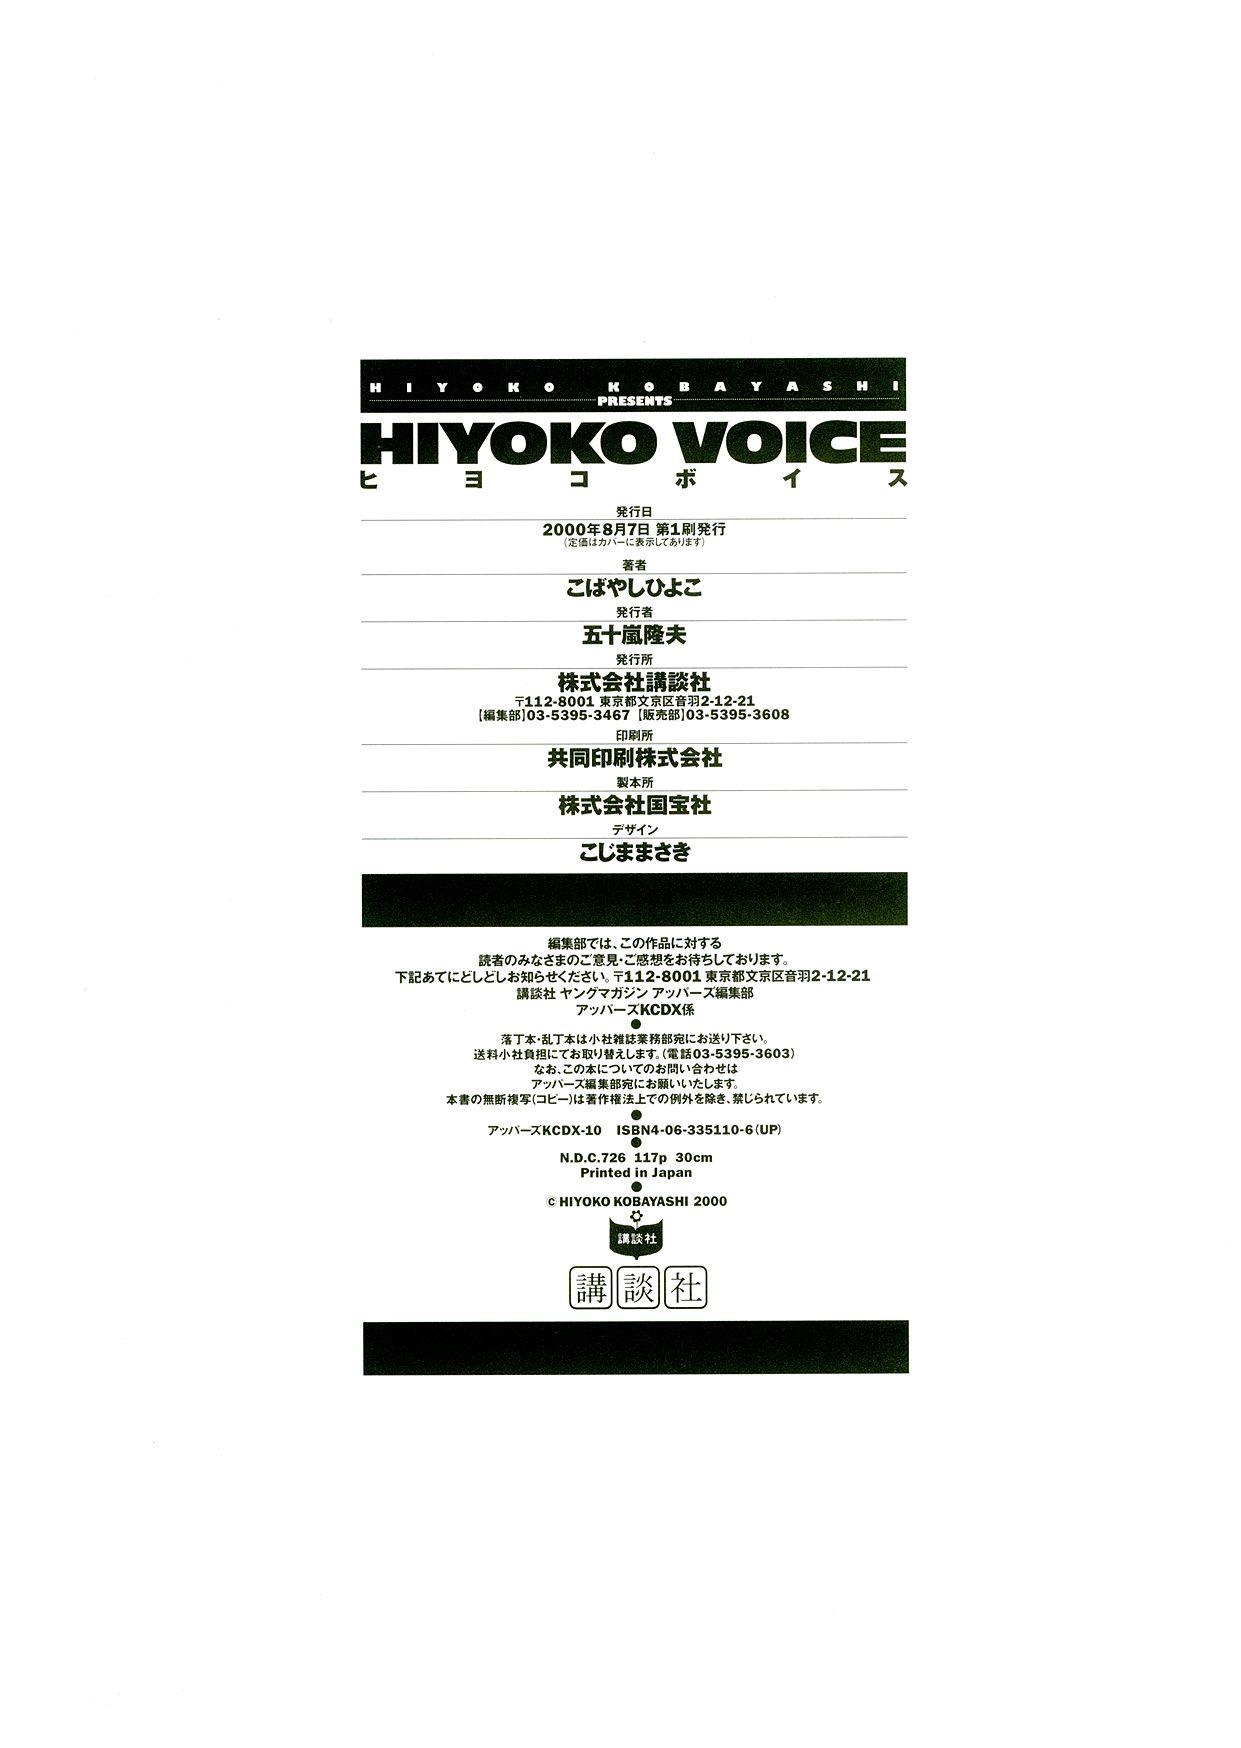 HIYOKO VOICE 114